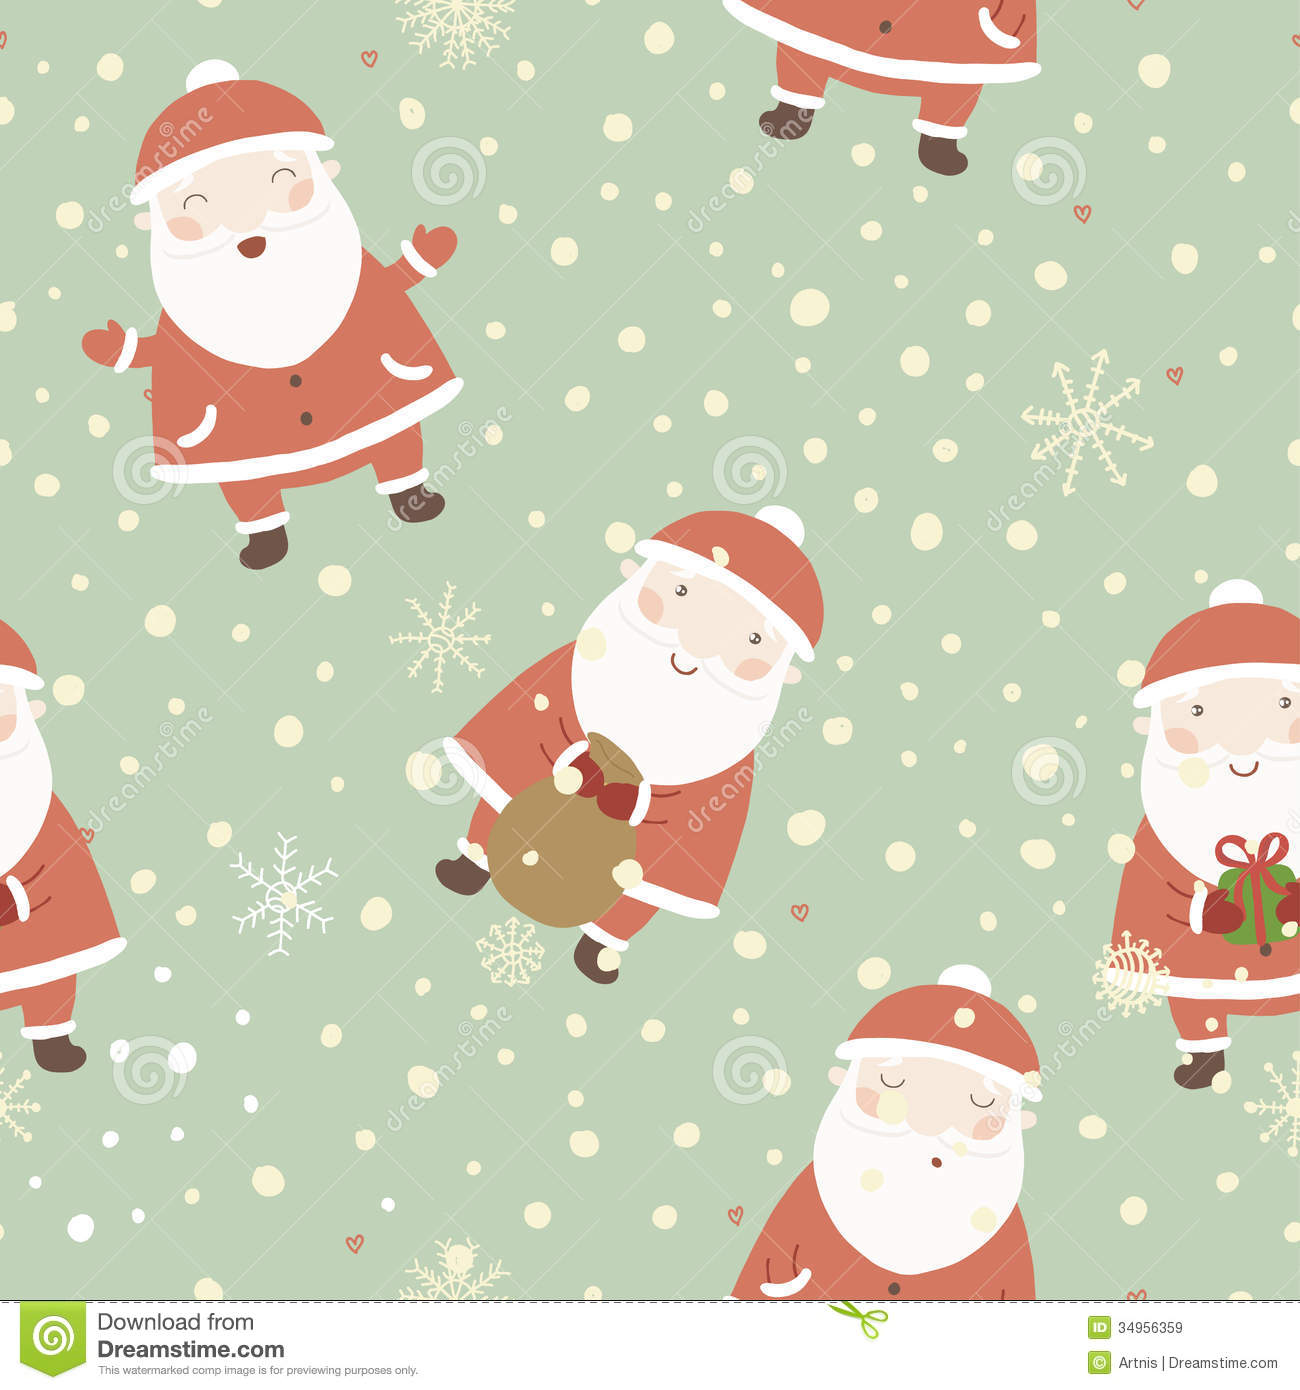 Cute Cartoon Christmas Wallpaper HD